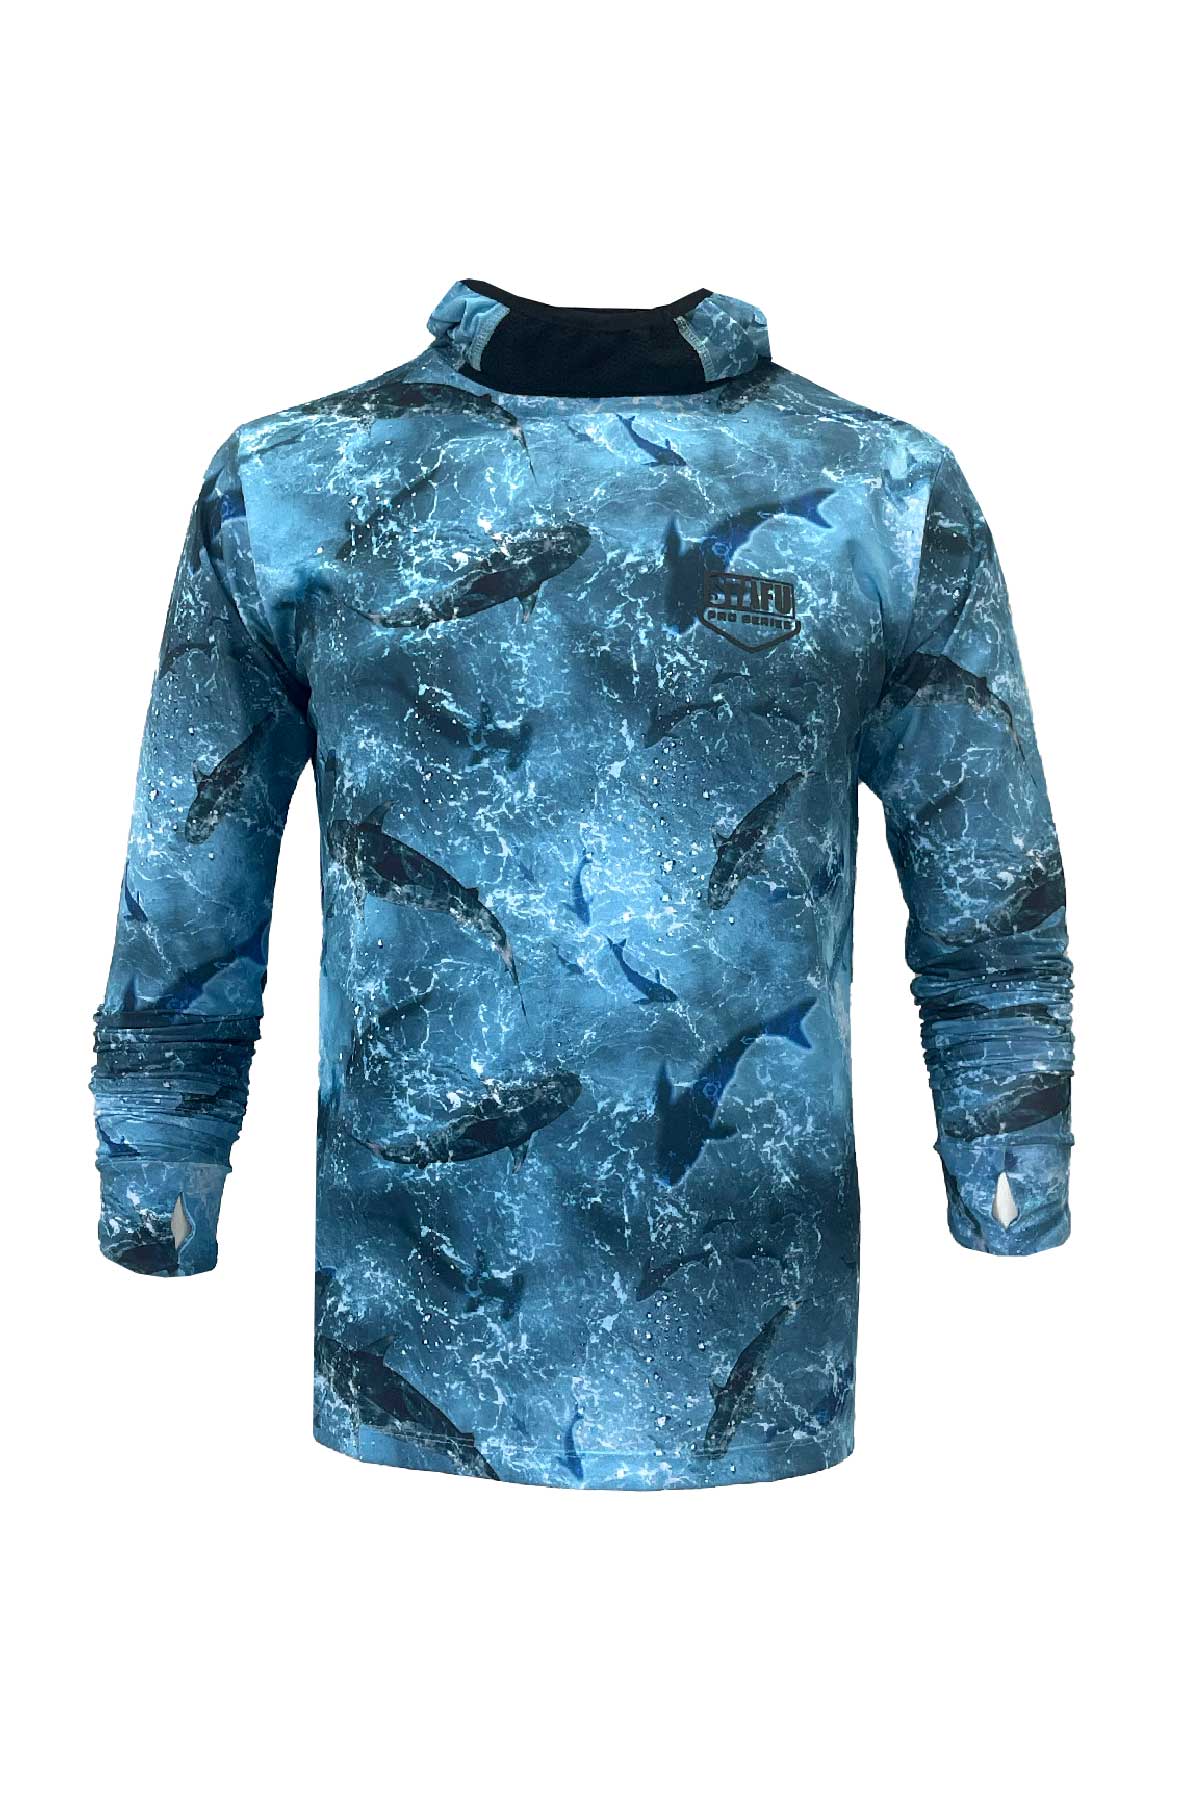 Haka Men's Hooded Long Sleeve Fisherman Sailor Shark Patterned Blue UV Protected Shirt